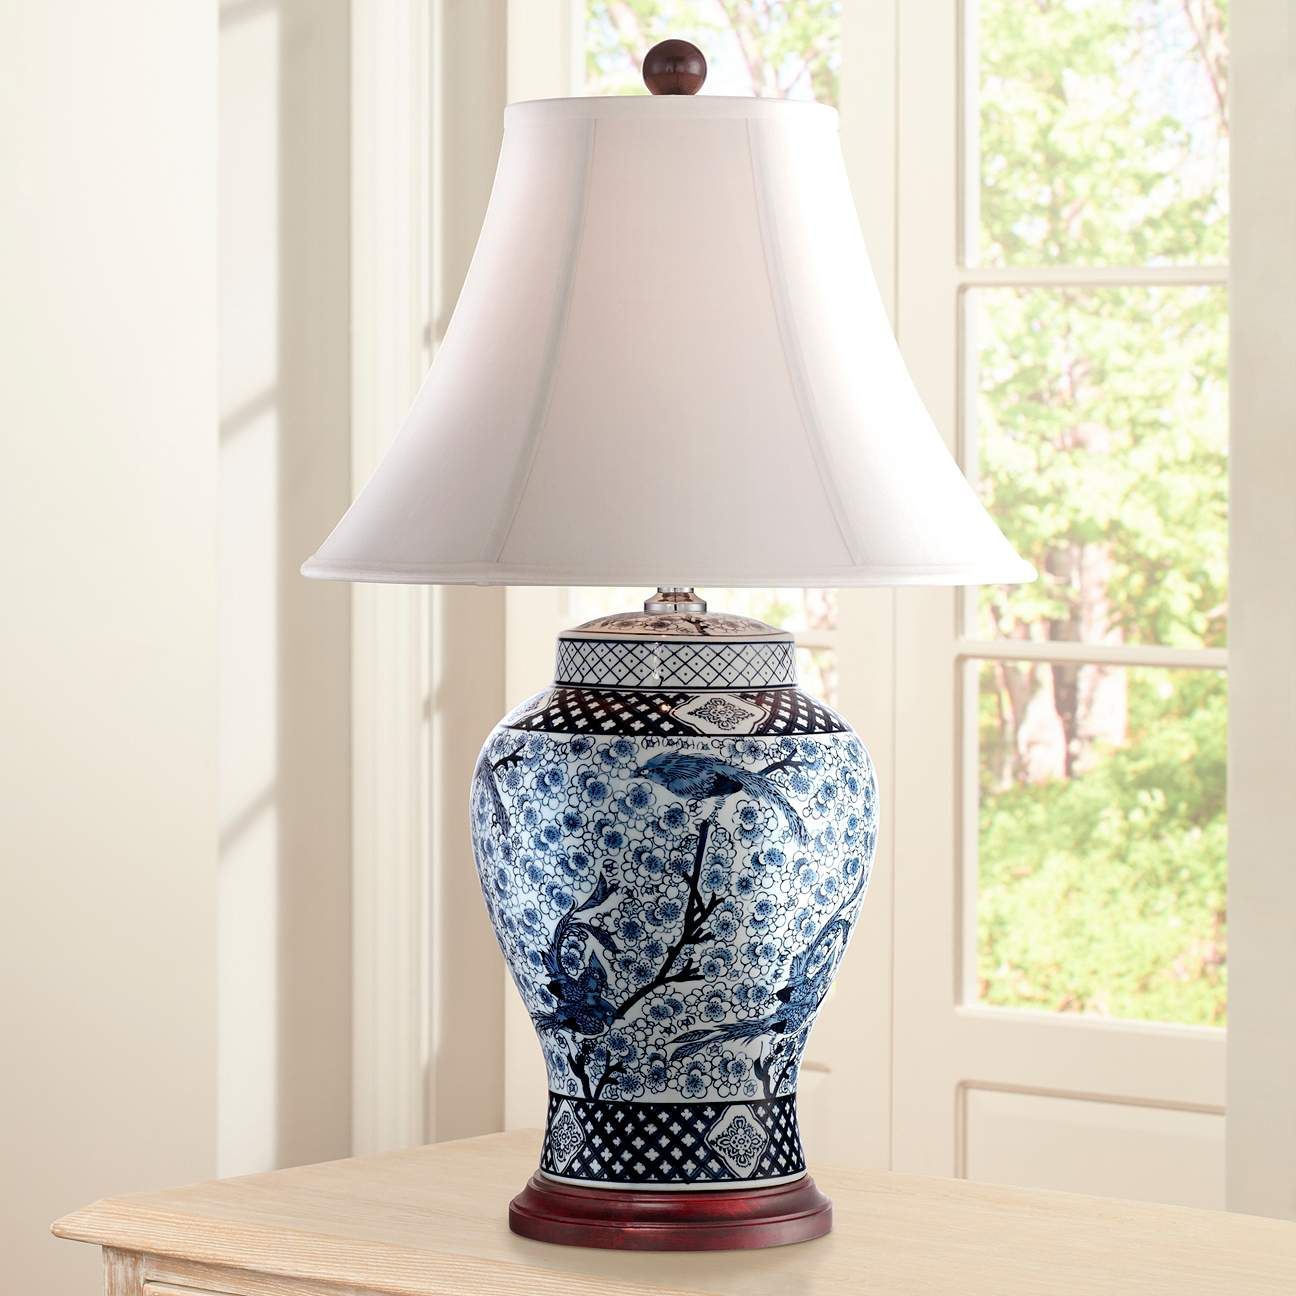 Shonna Blue and White Porcelain Jar Table Lamp | LampsPlus.com